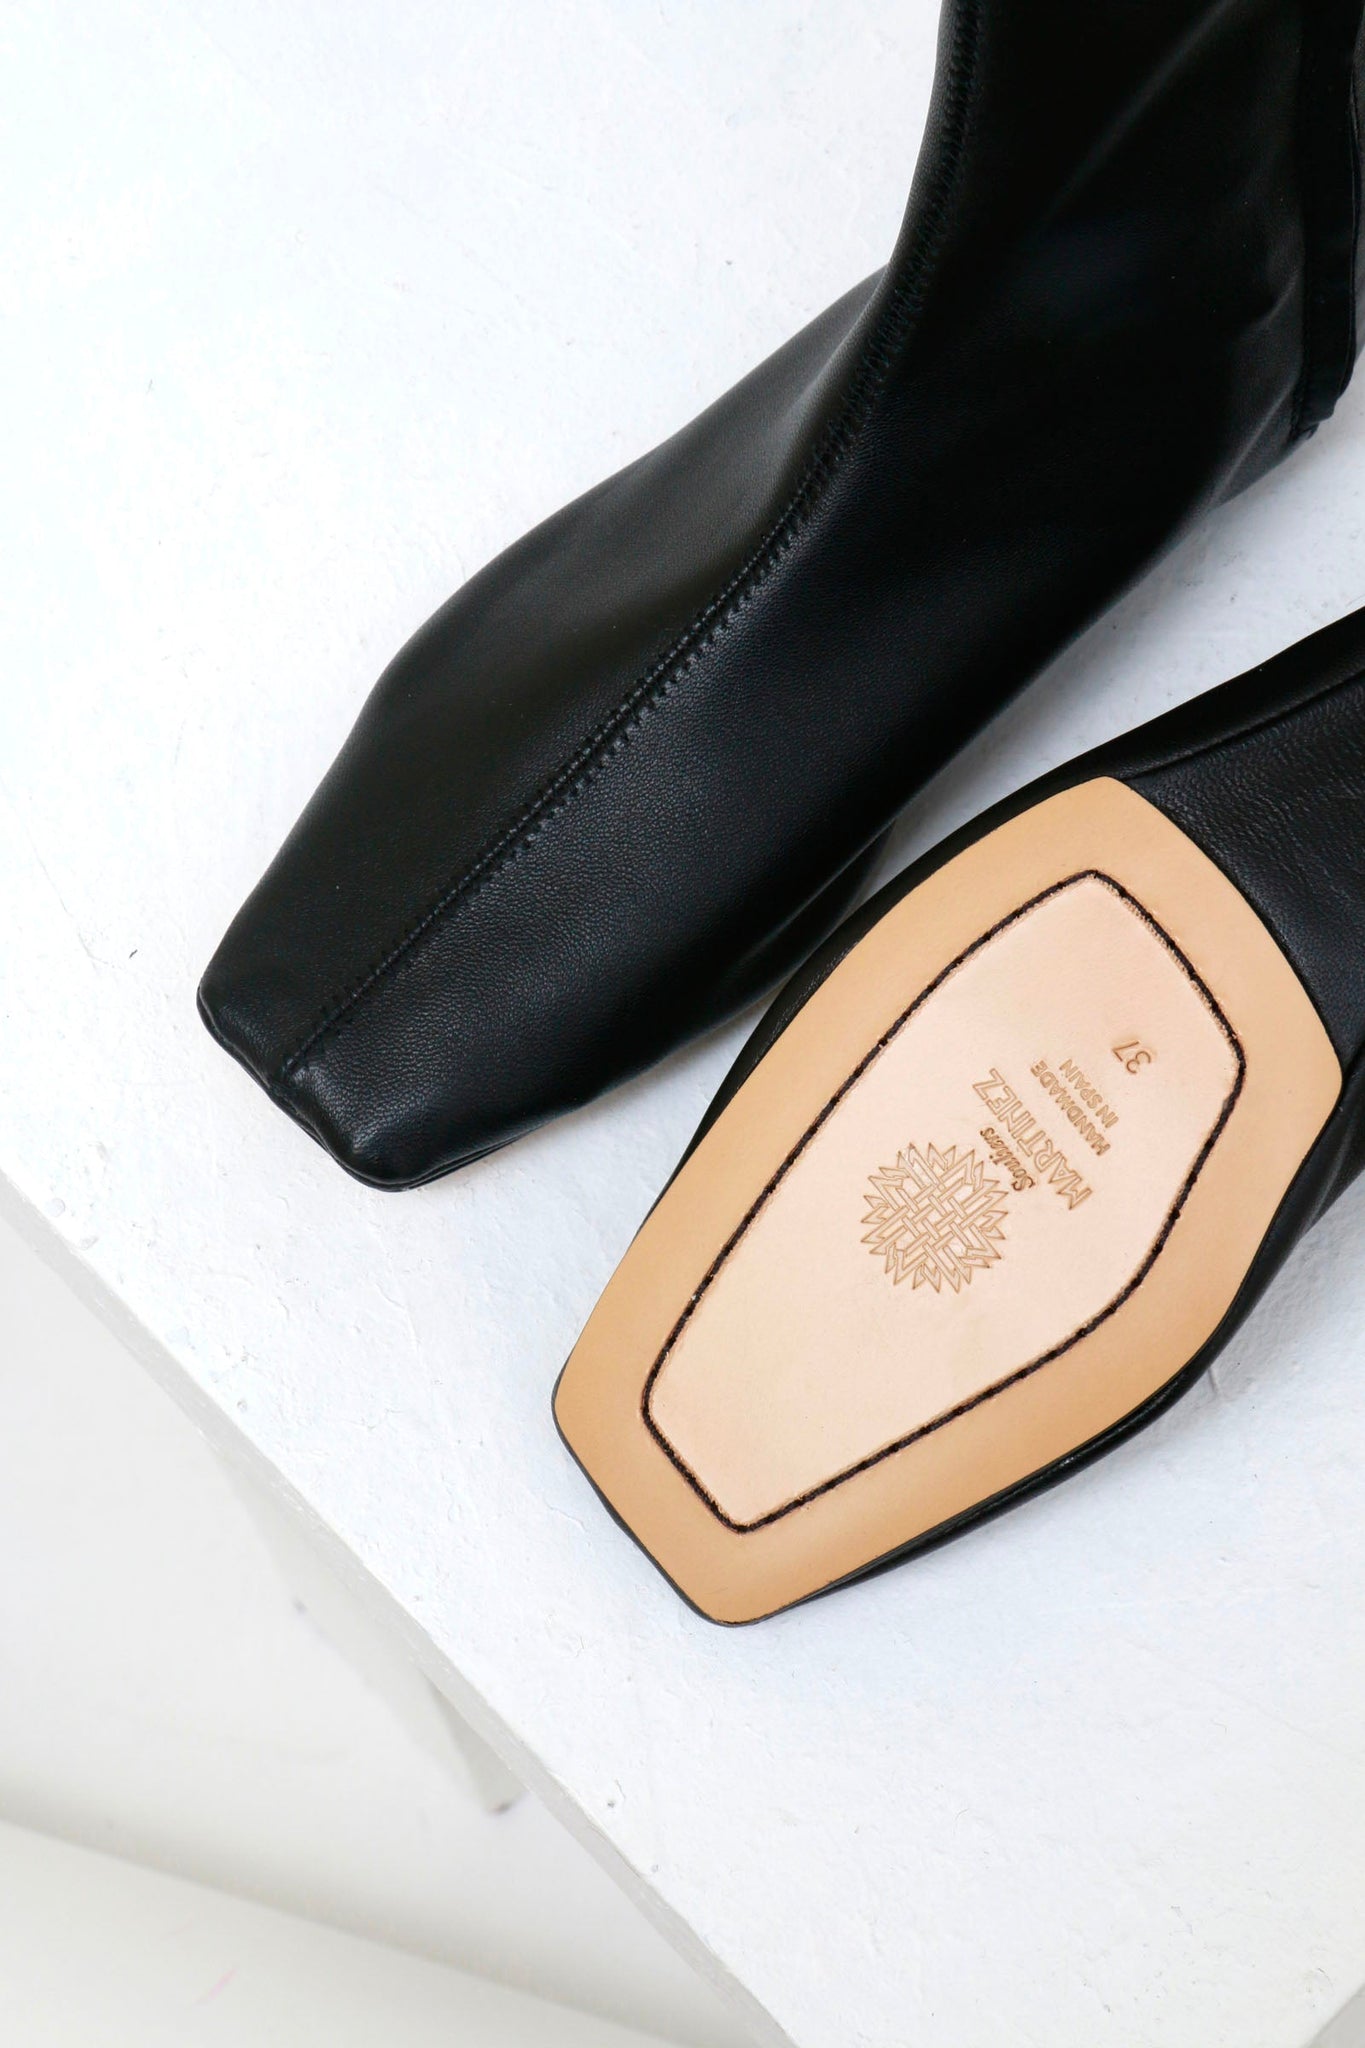 Souliers Martinez Sale Item ABANDO - Black Soft Leather Sacchetto Boots 